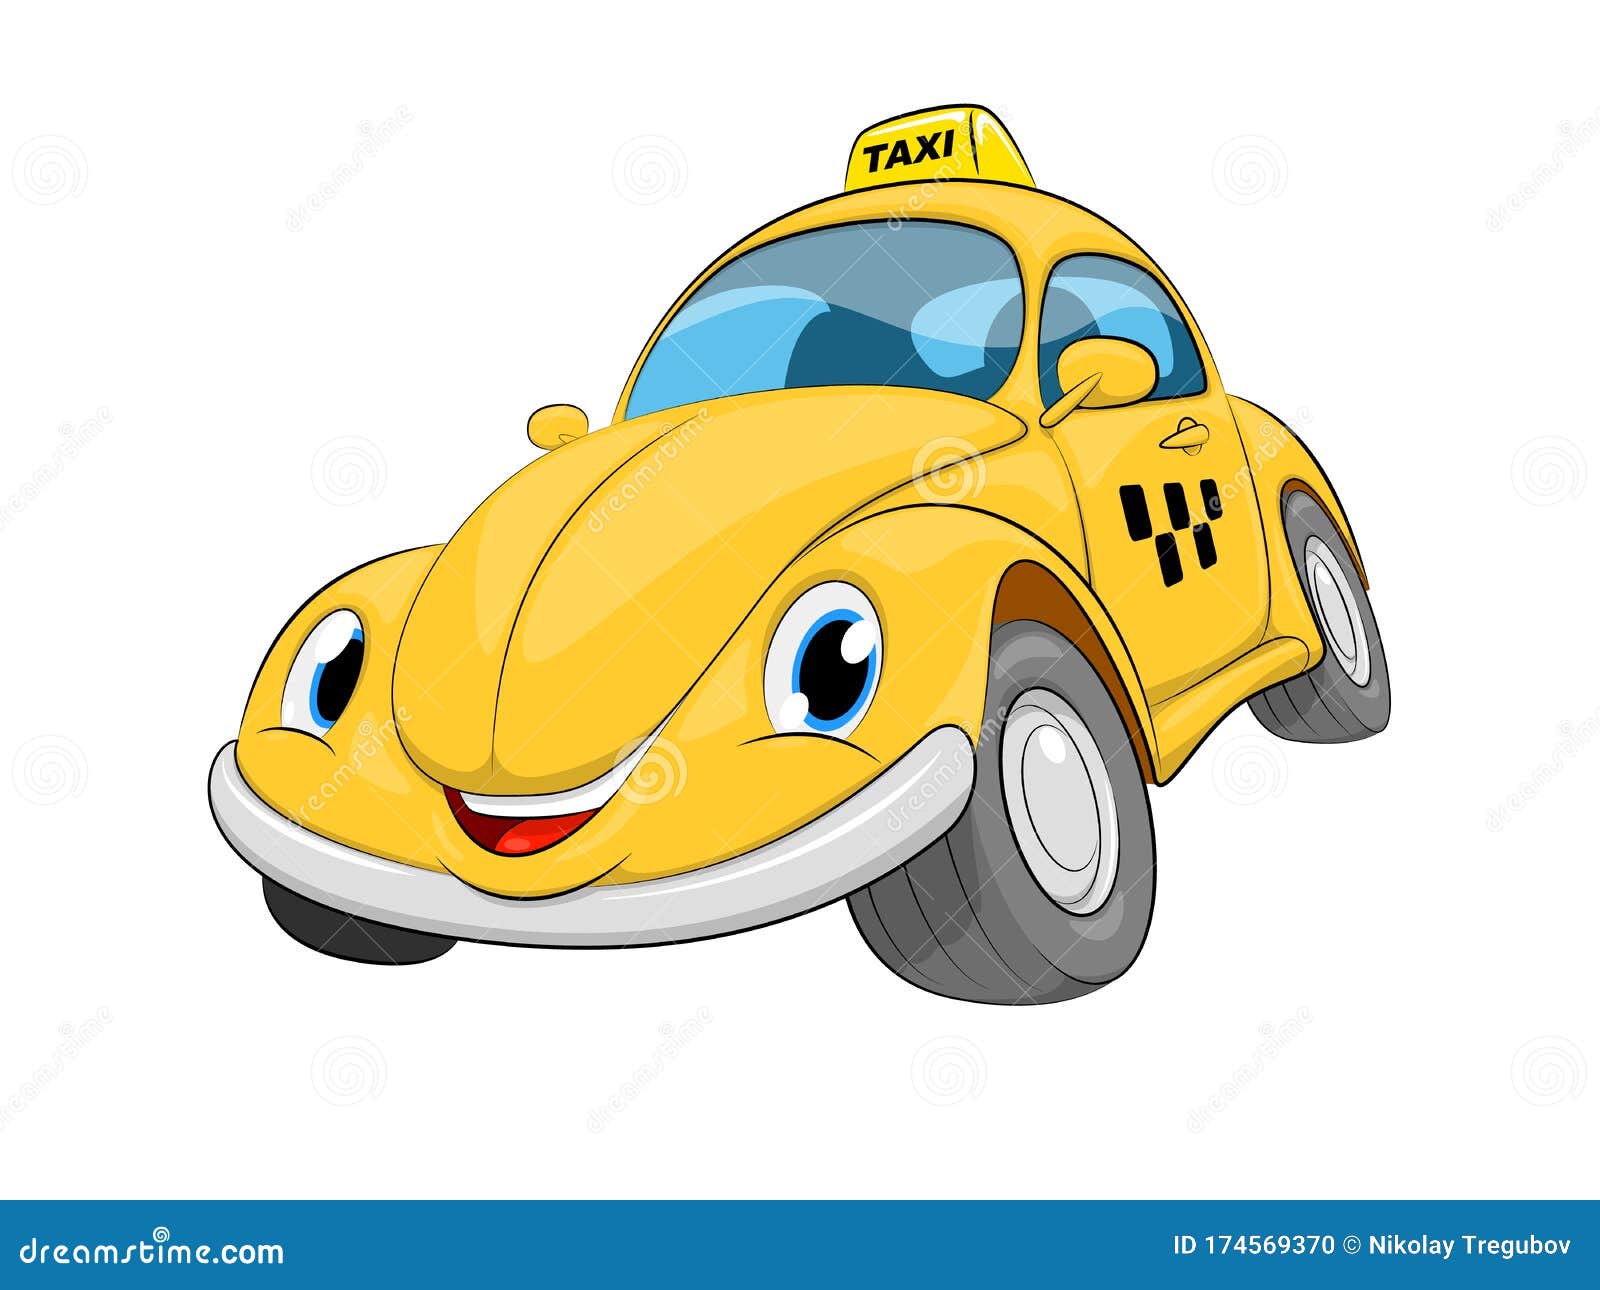 Divertido Coche De Taxi De Dibujos Animados. Un Coche Amarillo Sobre Fondo  Blanco. Ilustración del Vector - Ilustración de divertido, popular:  174569370